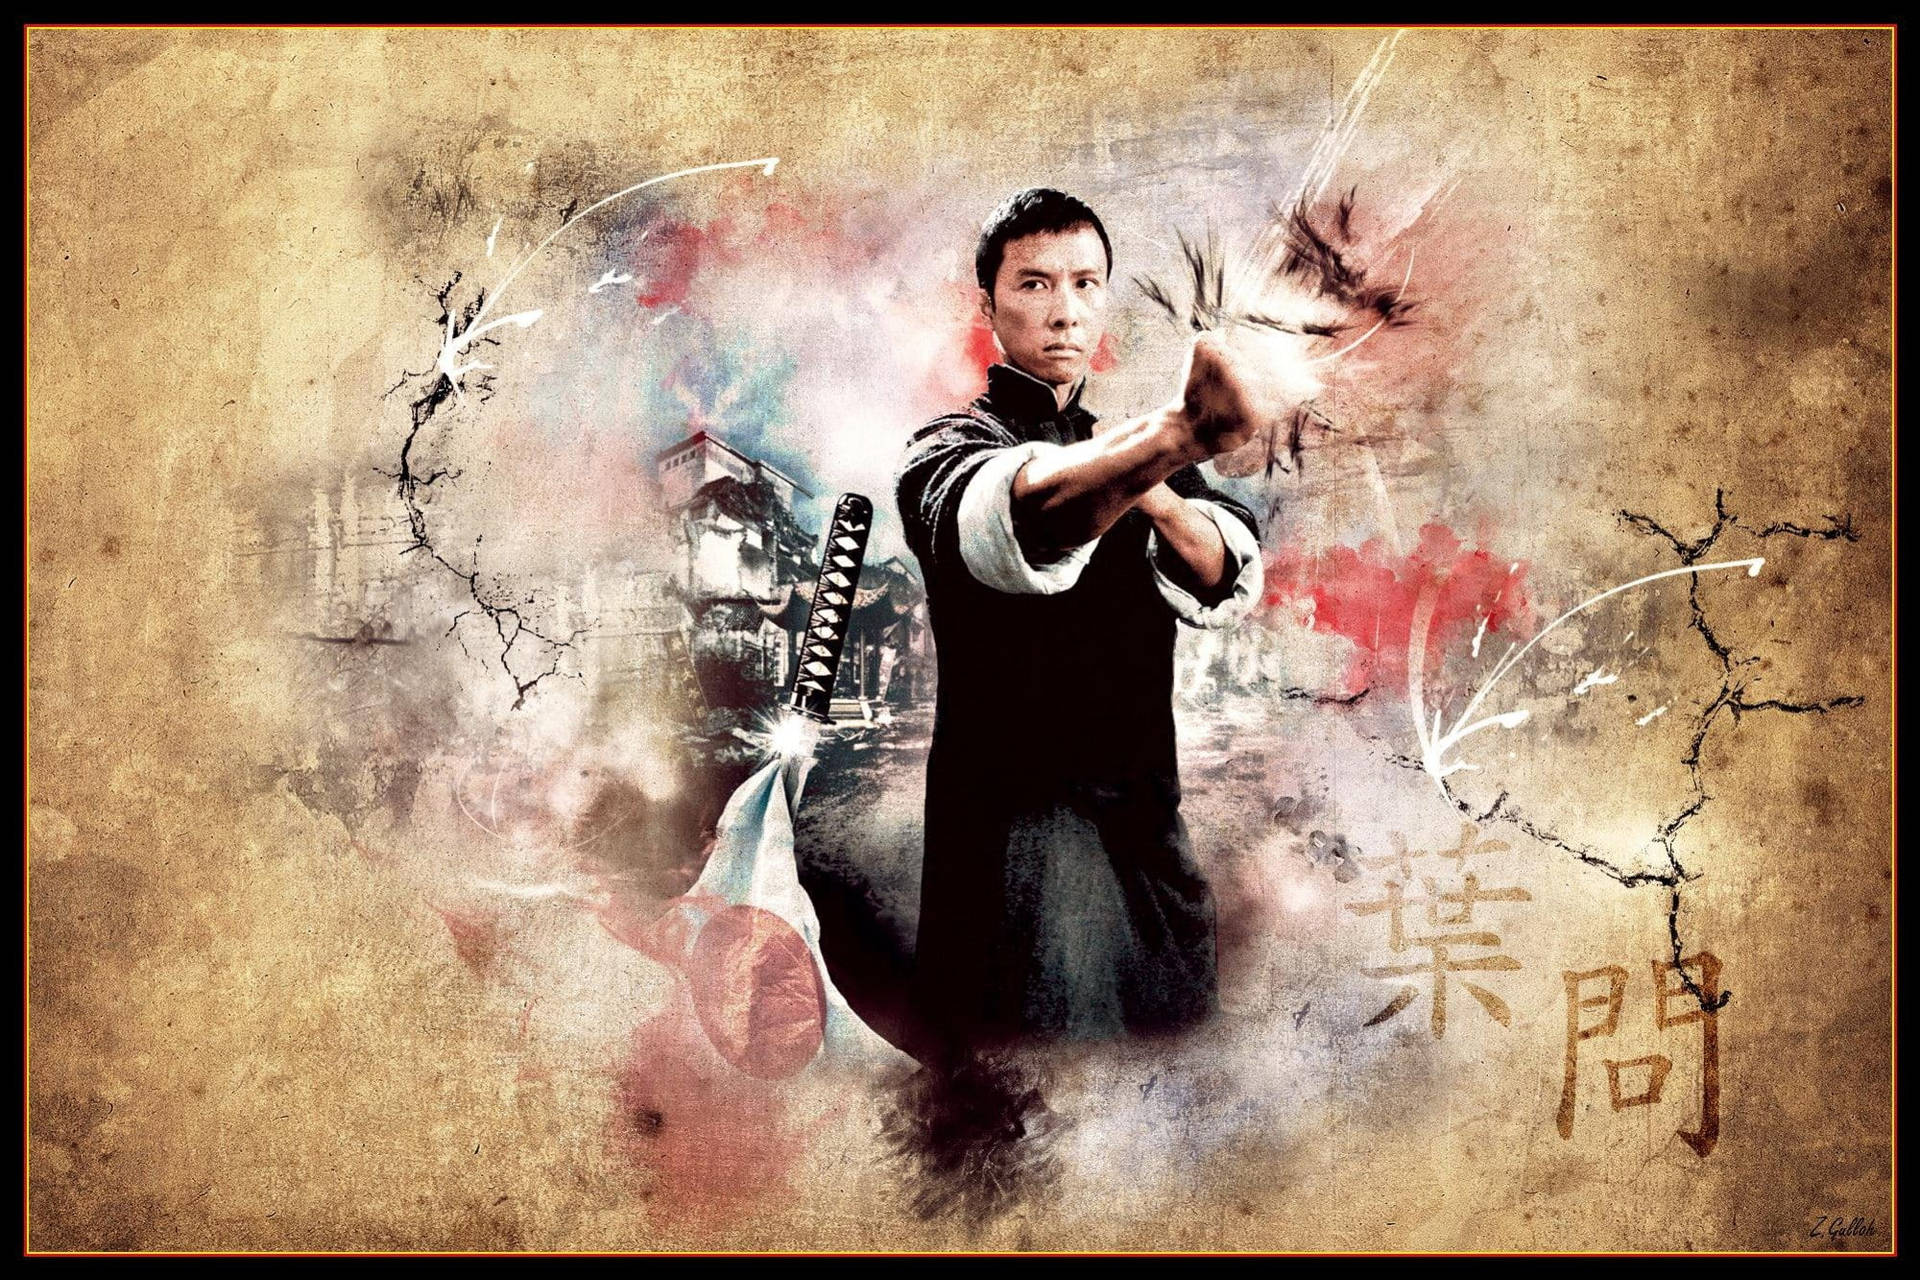 Wing Chun Wallpaper